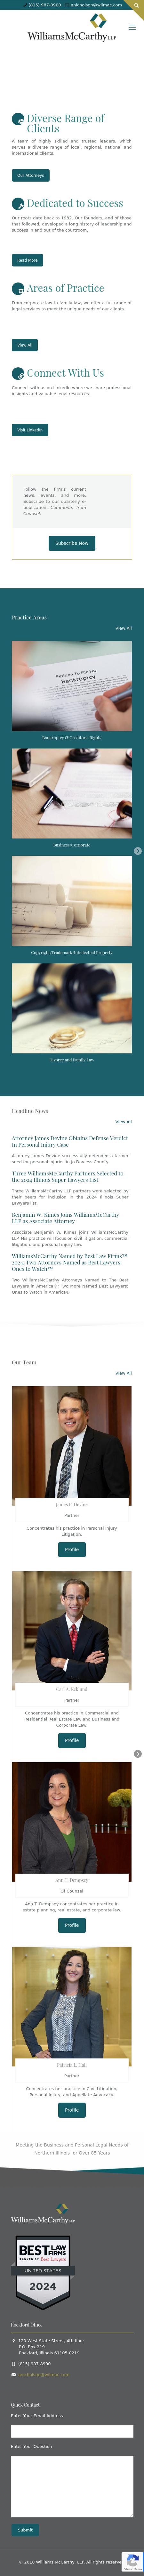 WilliamsMcCarthy LLP - Rockford IL Lawyers